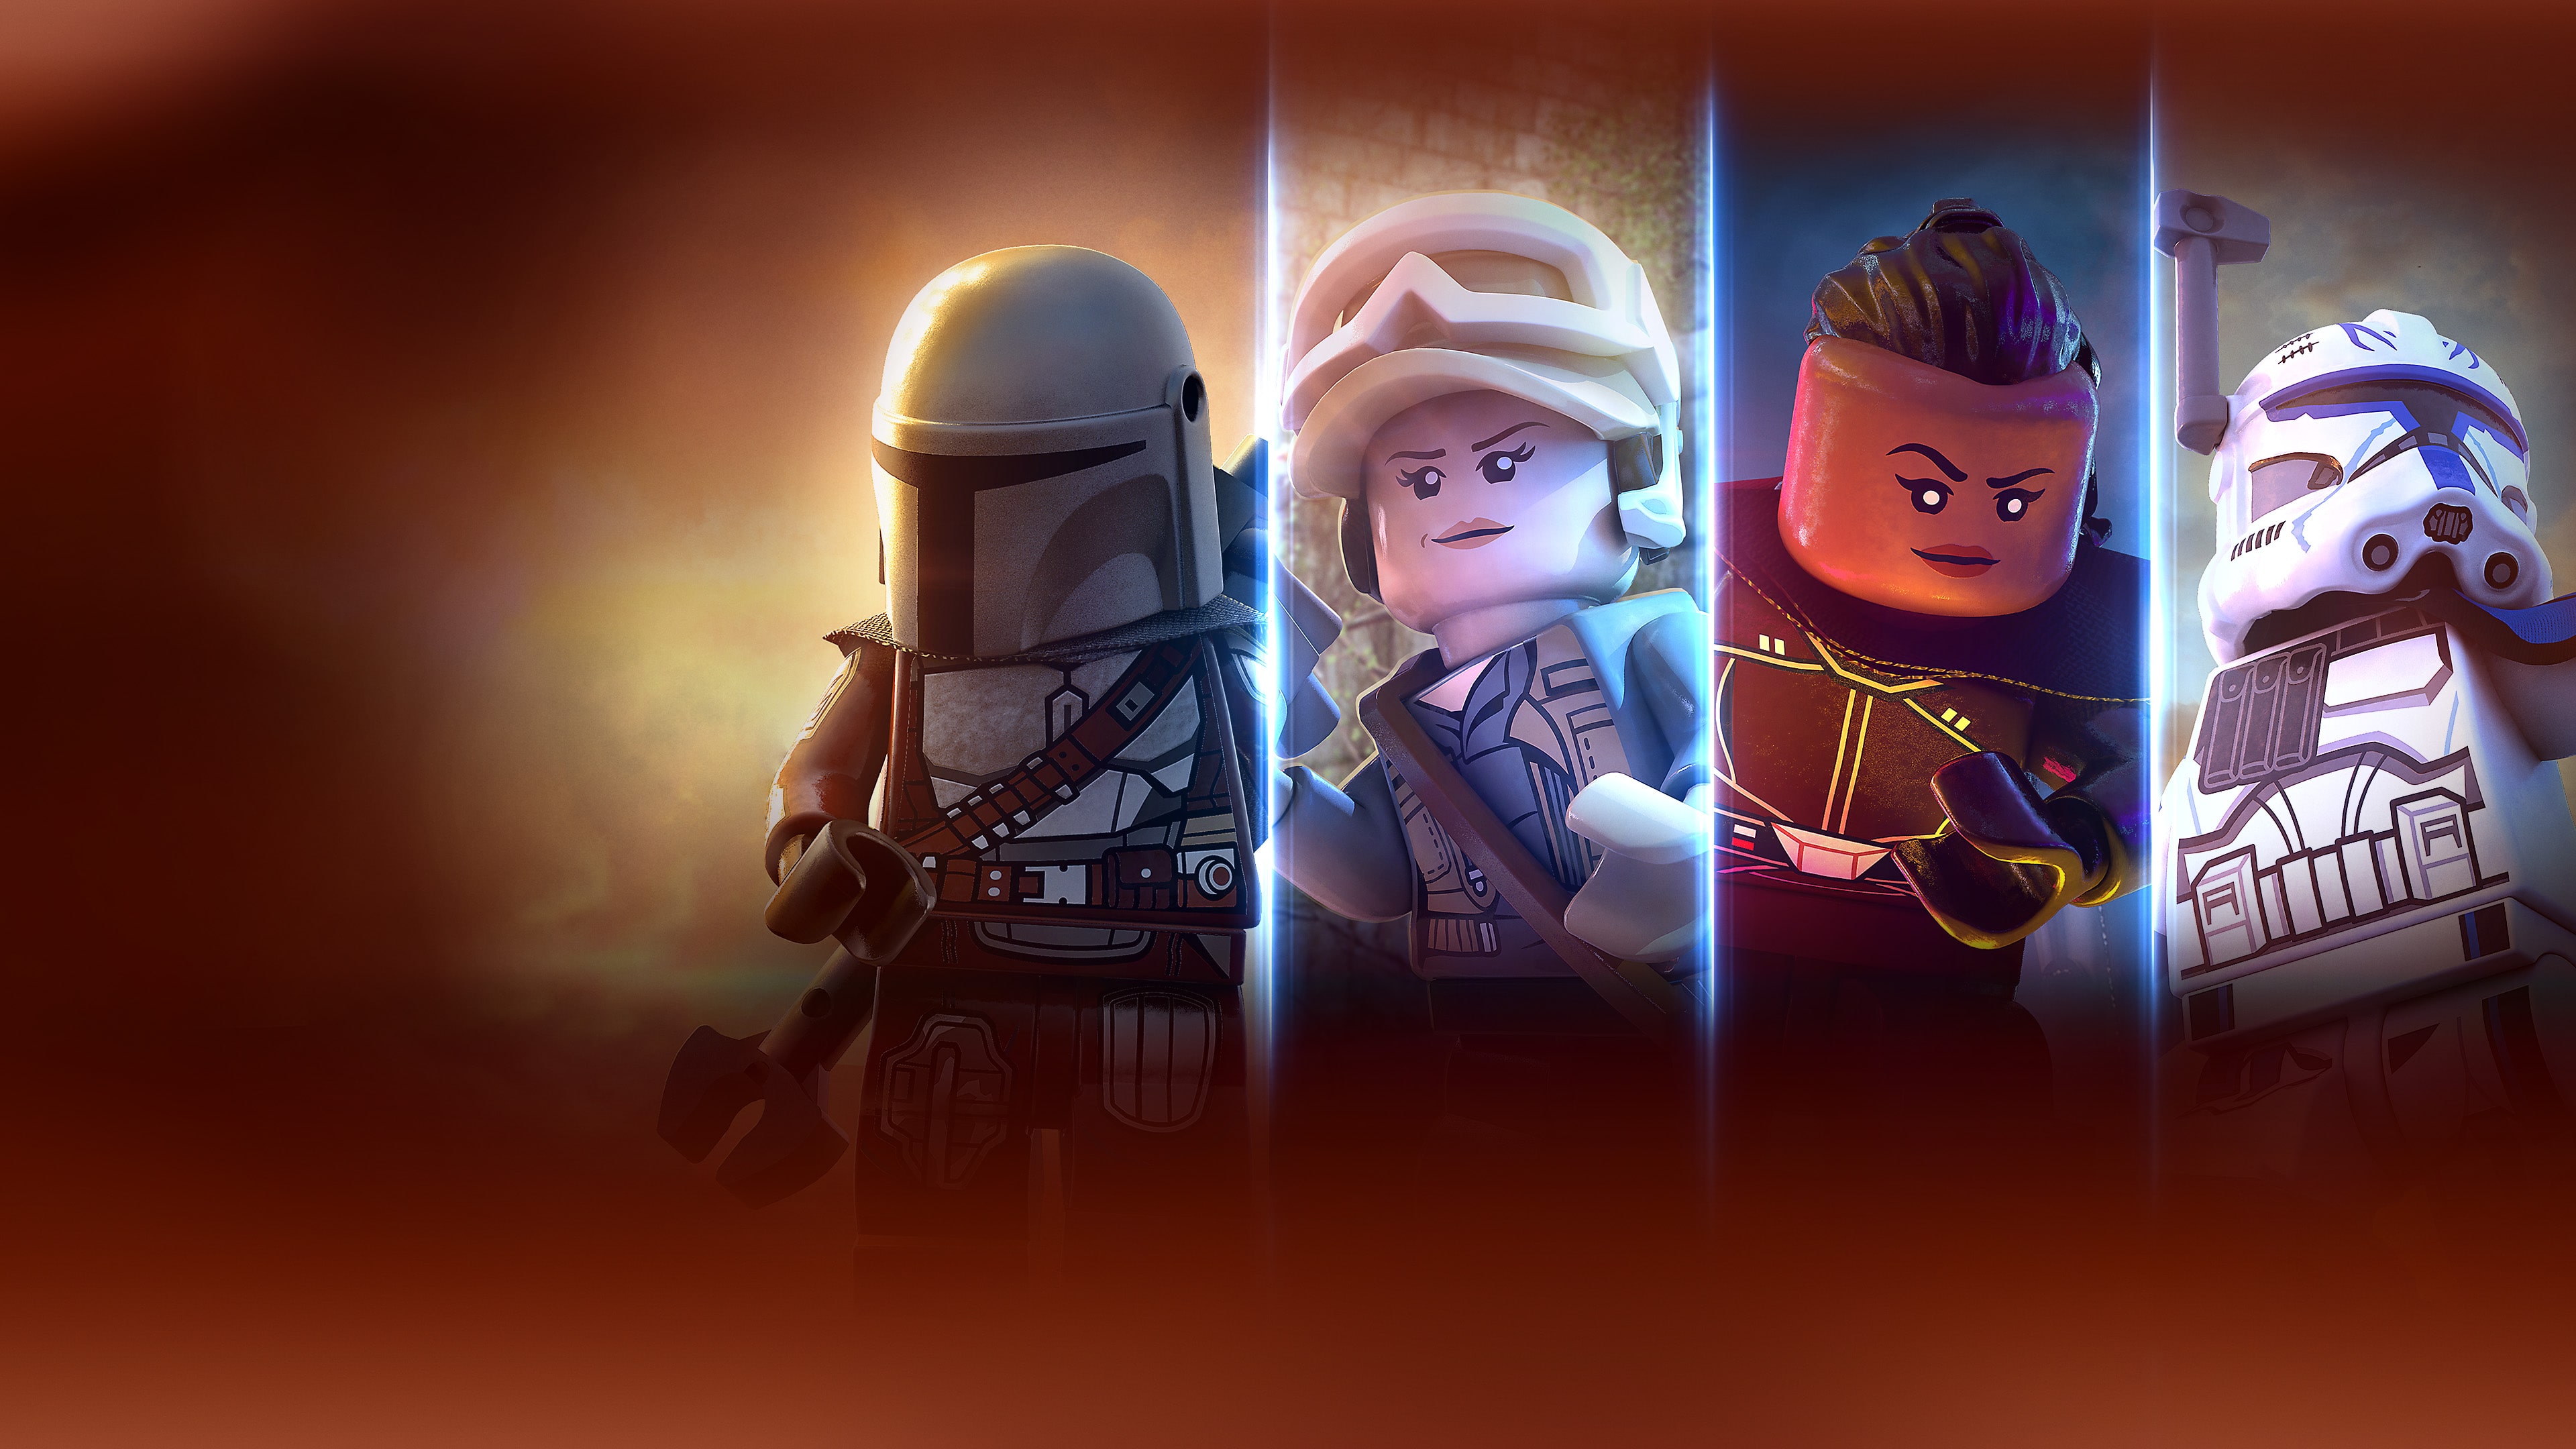 Collections de personnages LEGO® Star Wars™ La Saga Skywalker 1 et 2